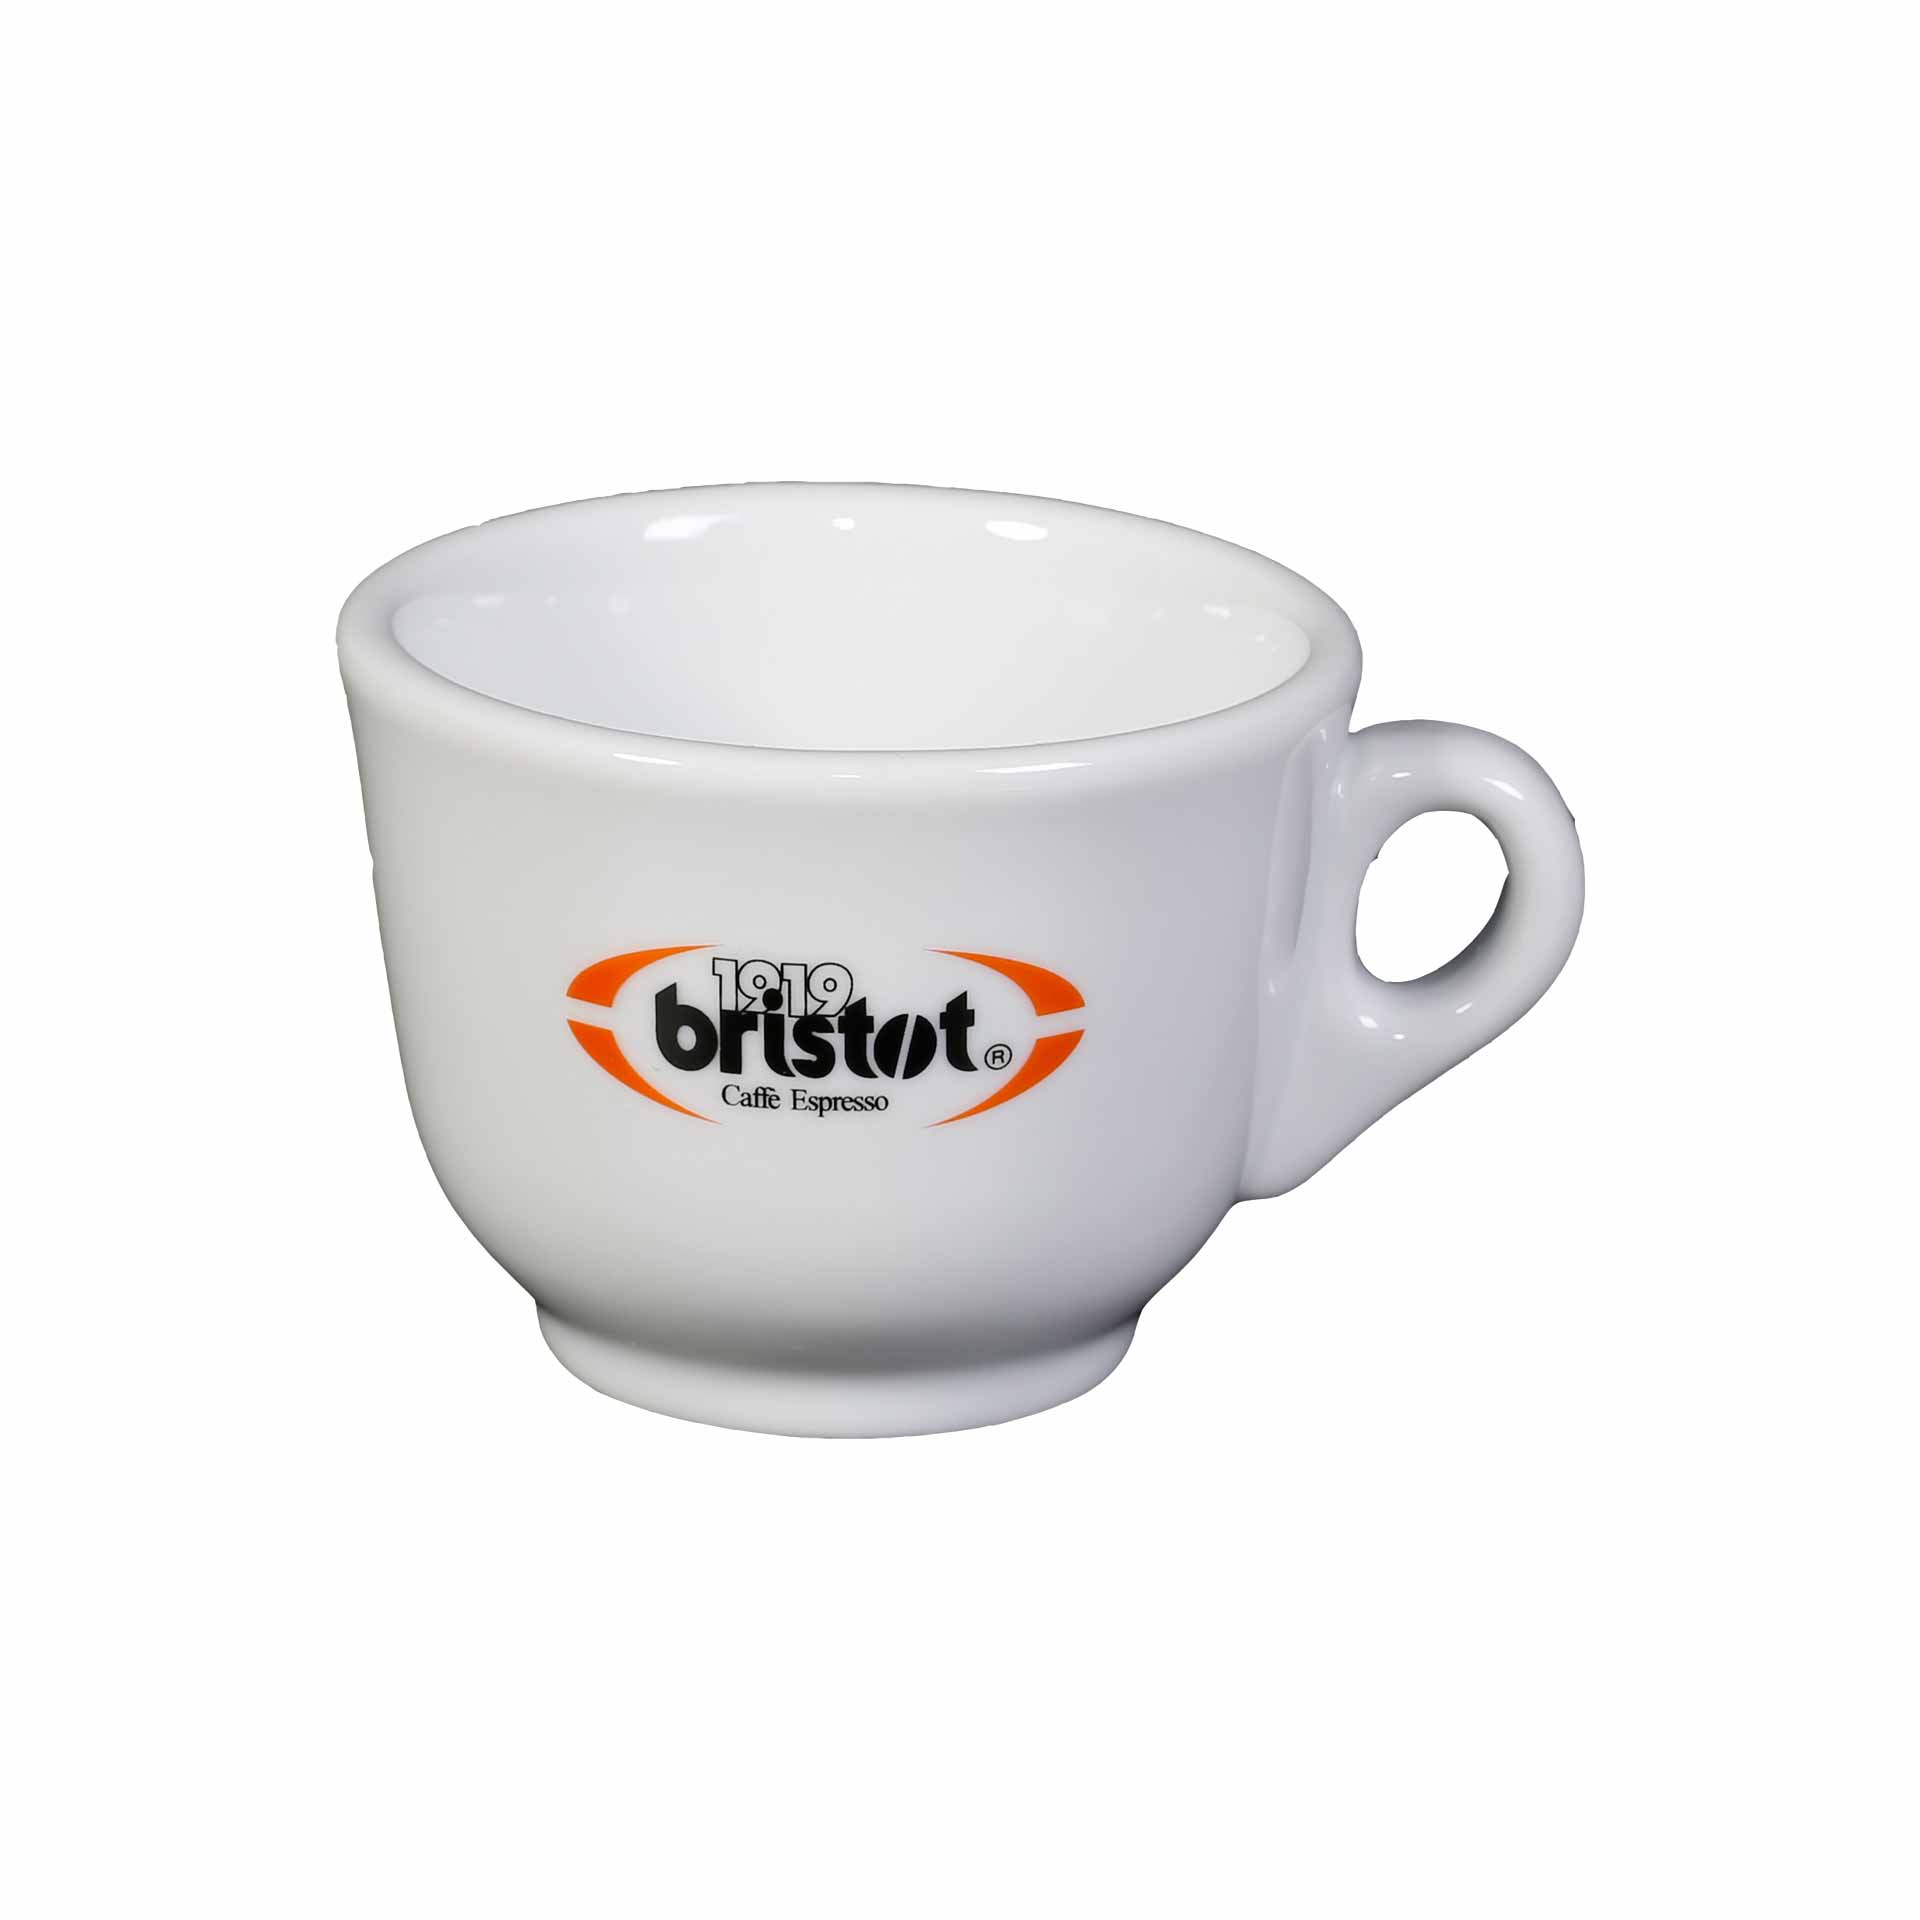 Bristot Cappuccinotasse Kaffeetasse mit Untertasse